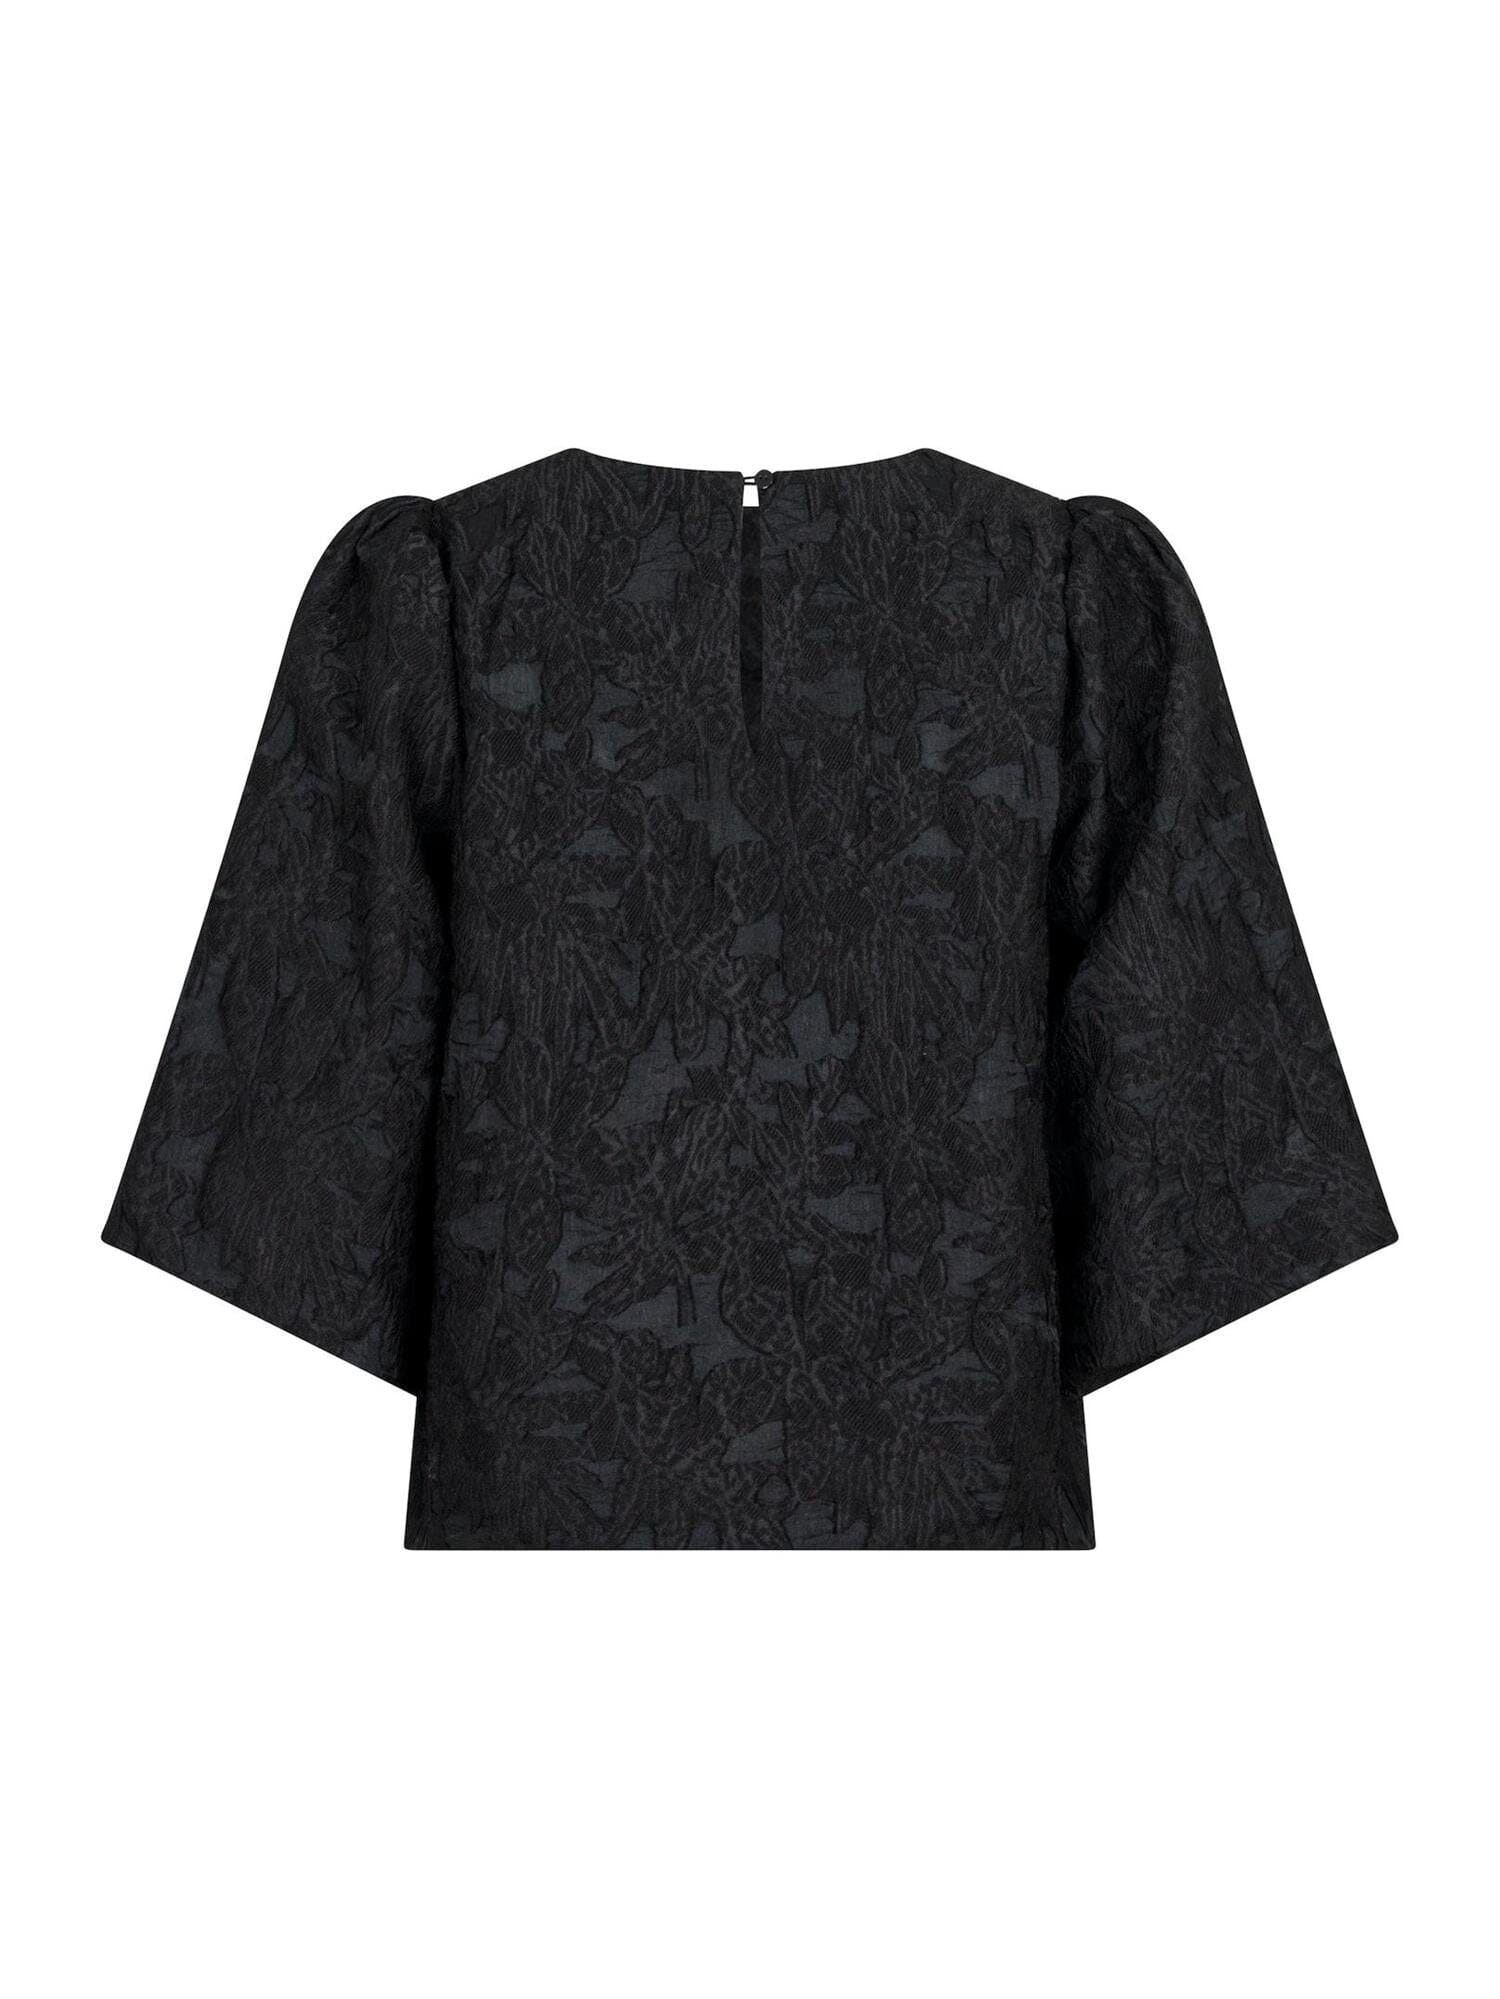 Neo Noir Lava Brocade Blouse Black Bluse